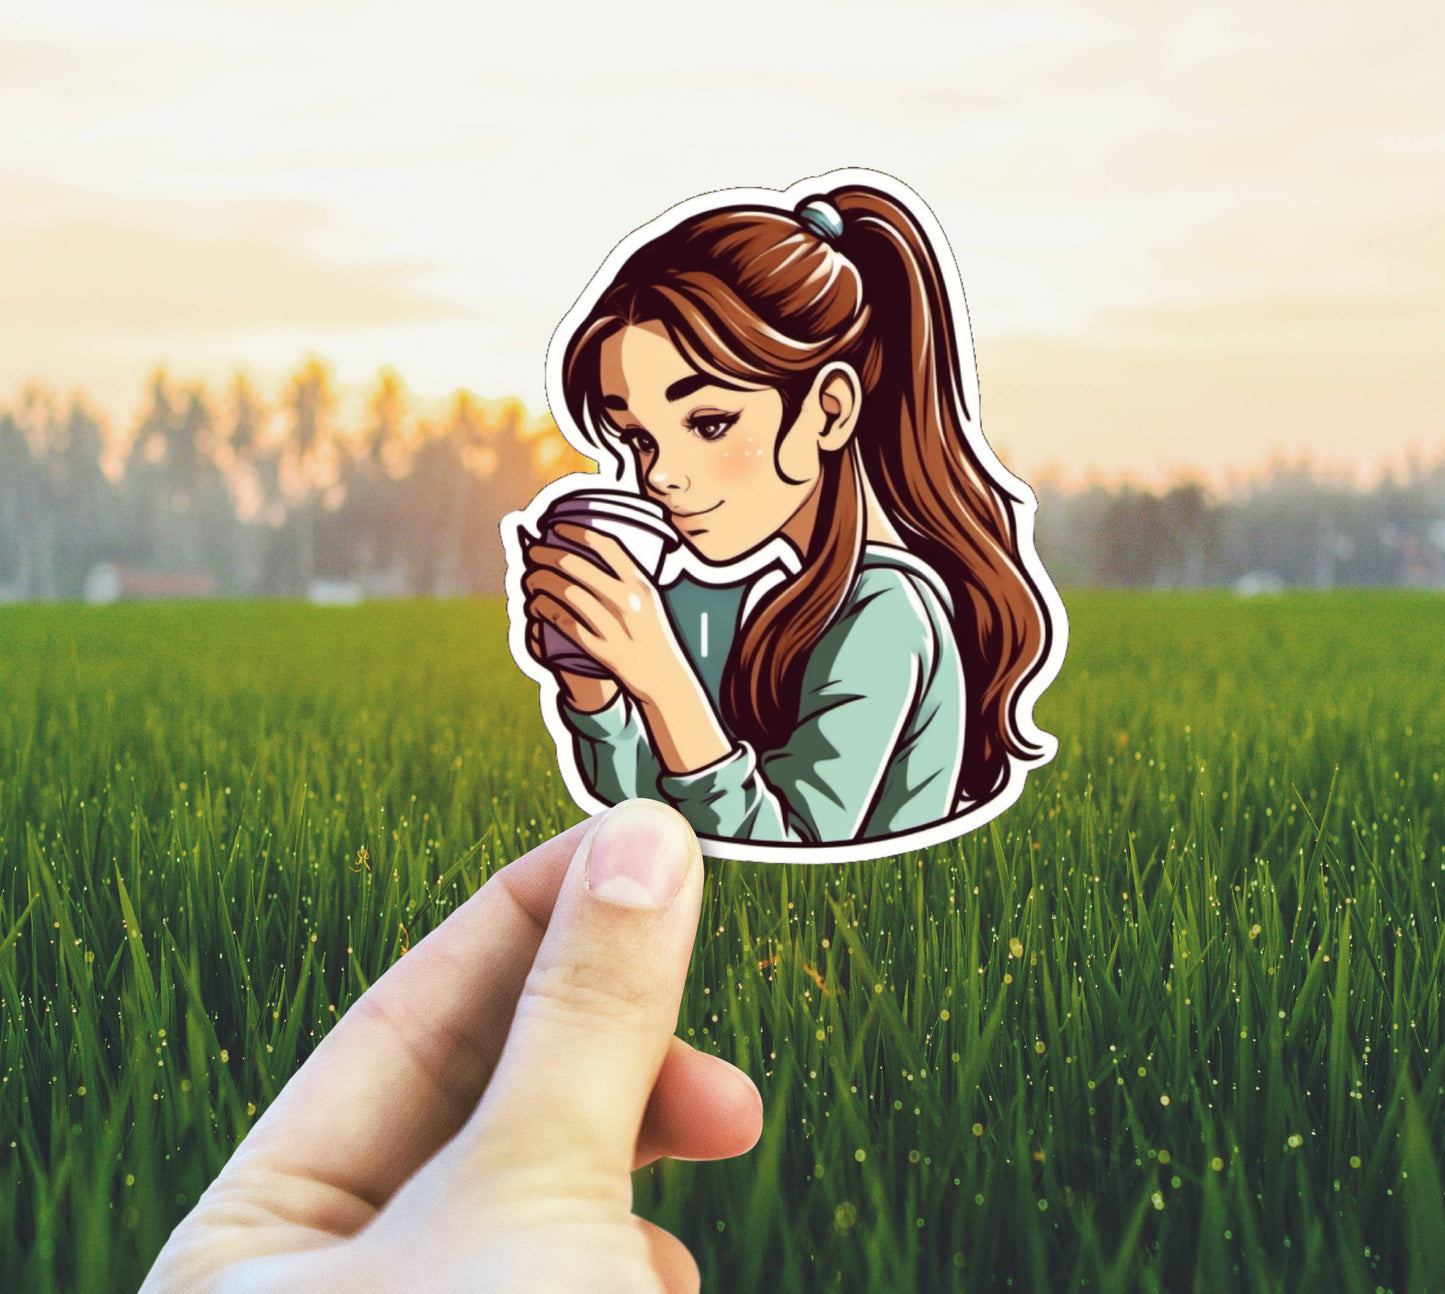 Girl power with Coffee Sticker